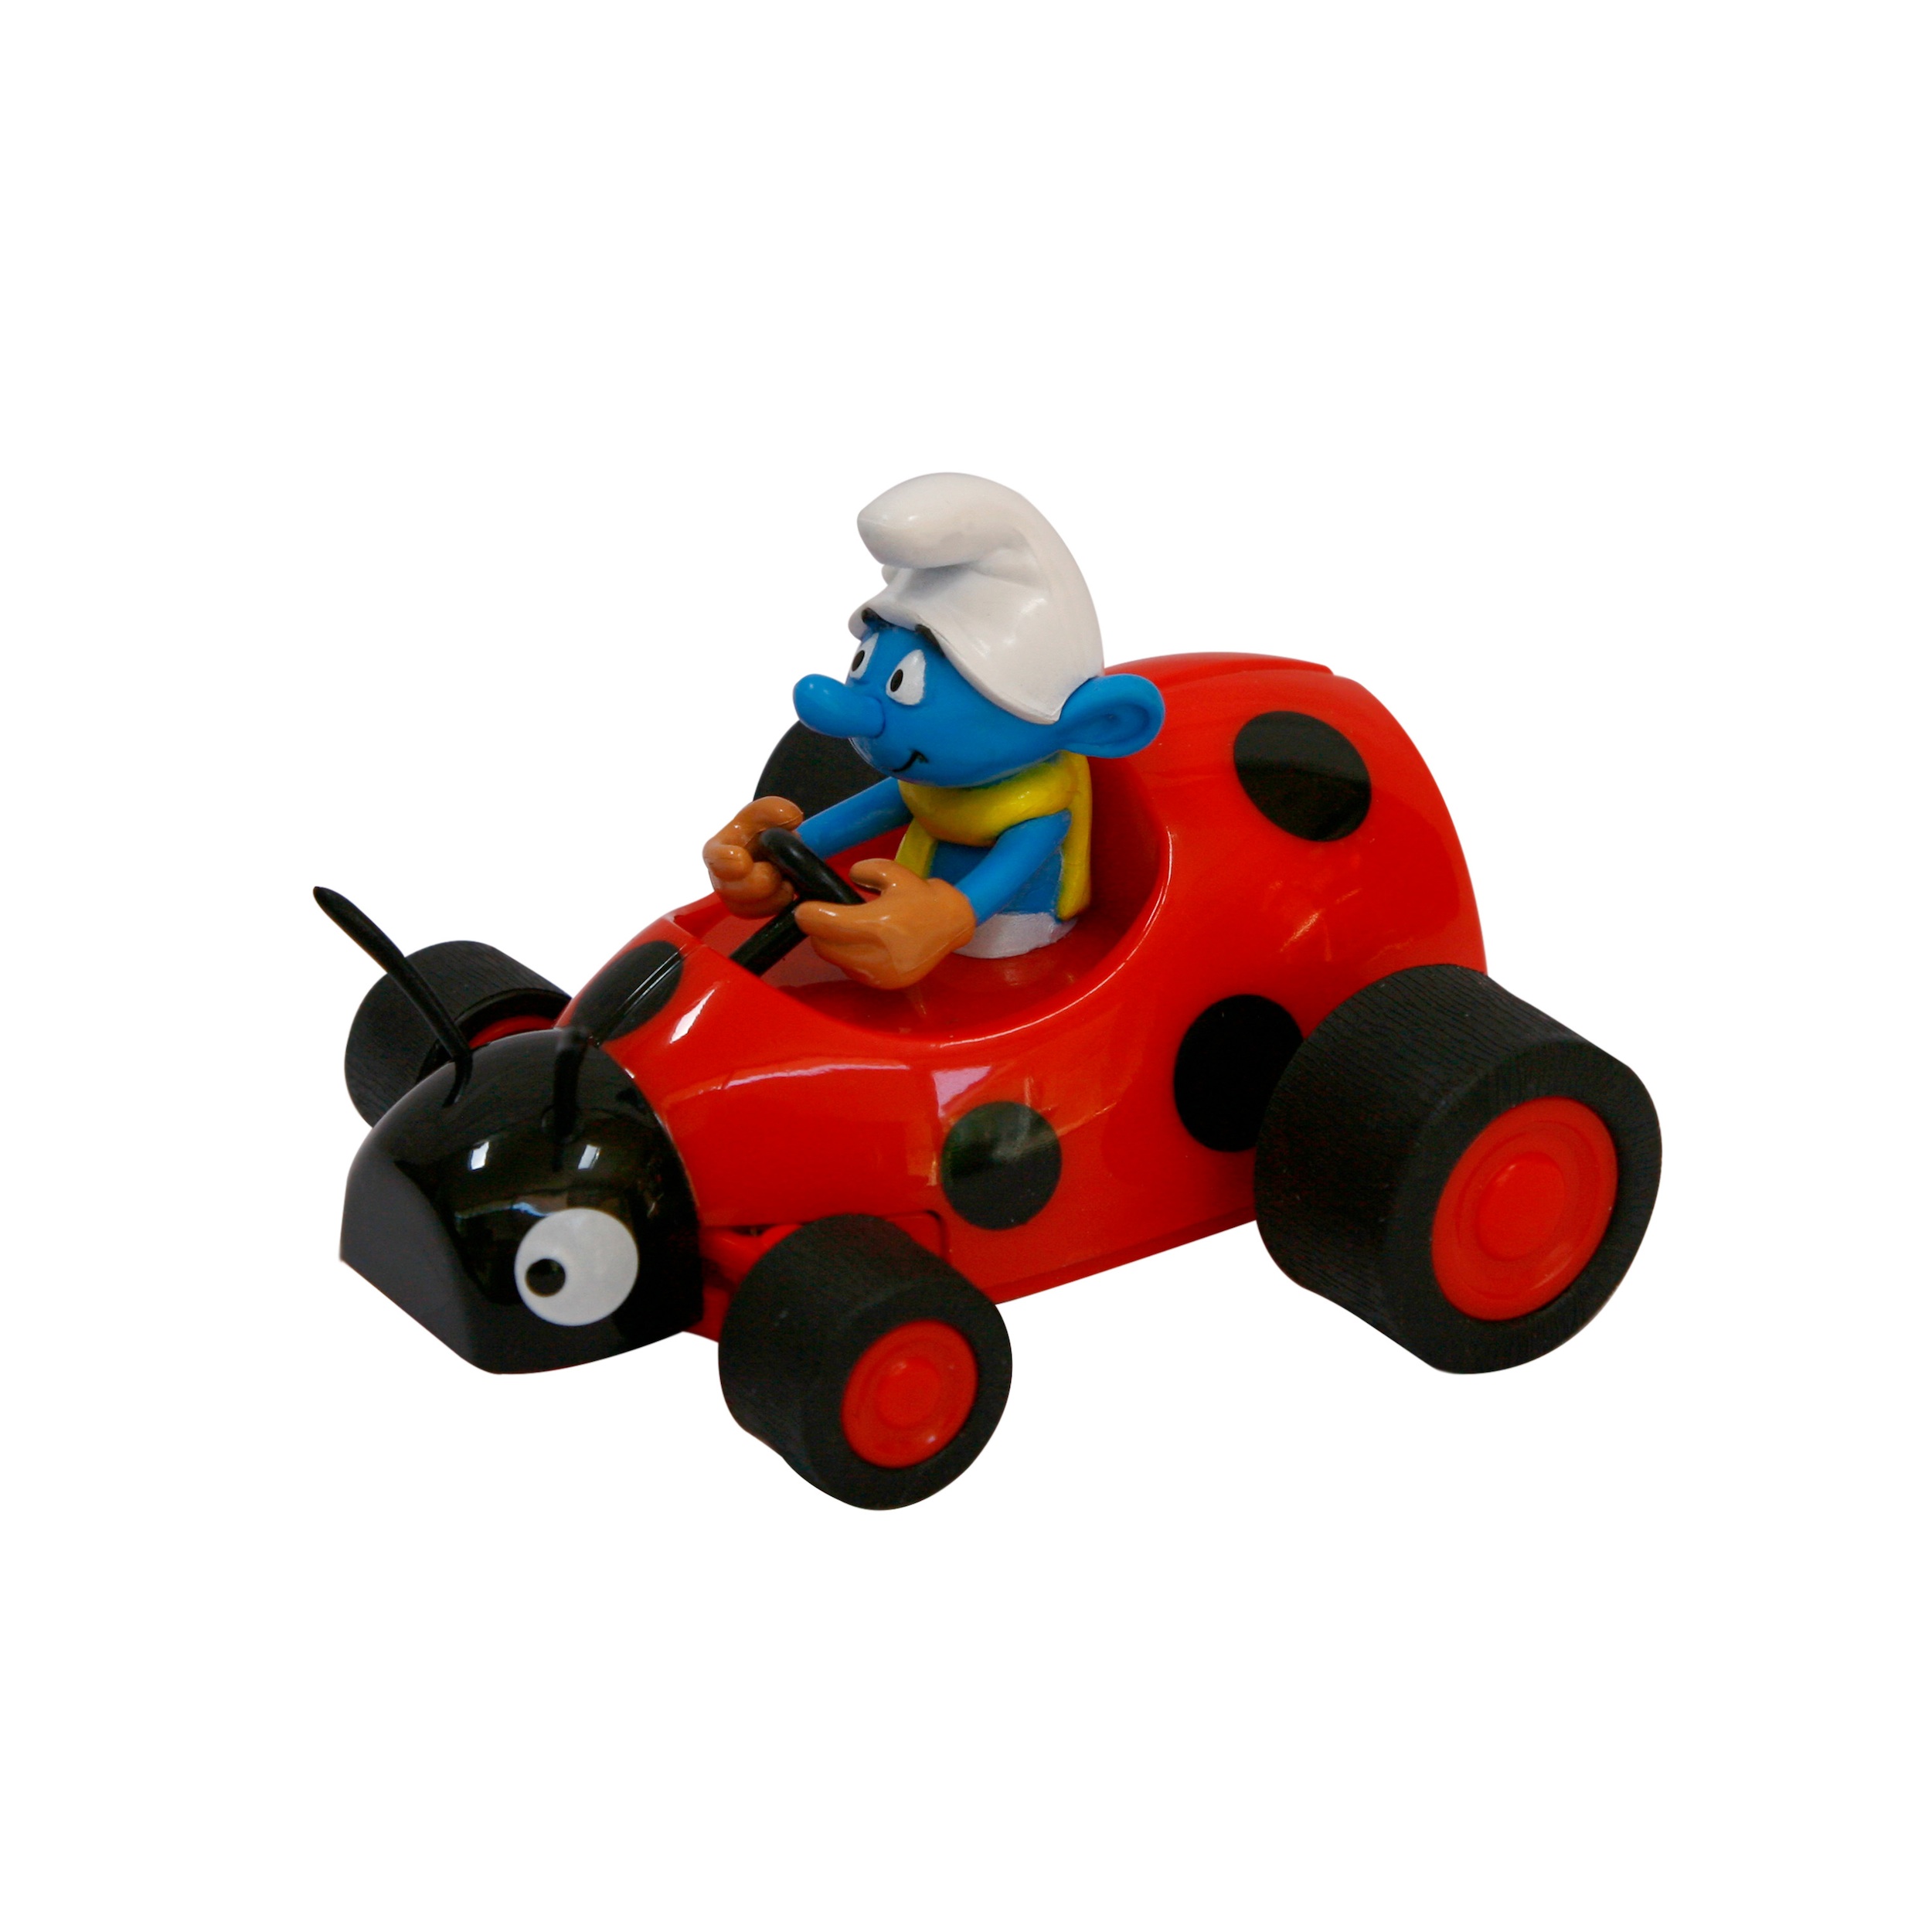 The Smurfs Vanity Bug Buggy RC Car